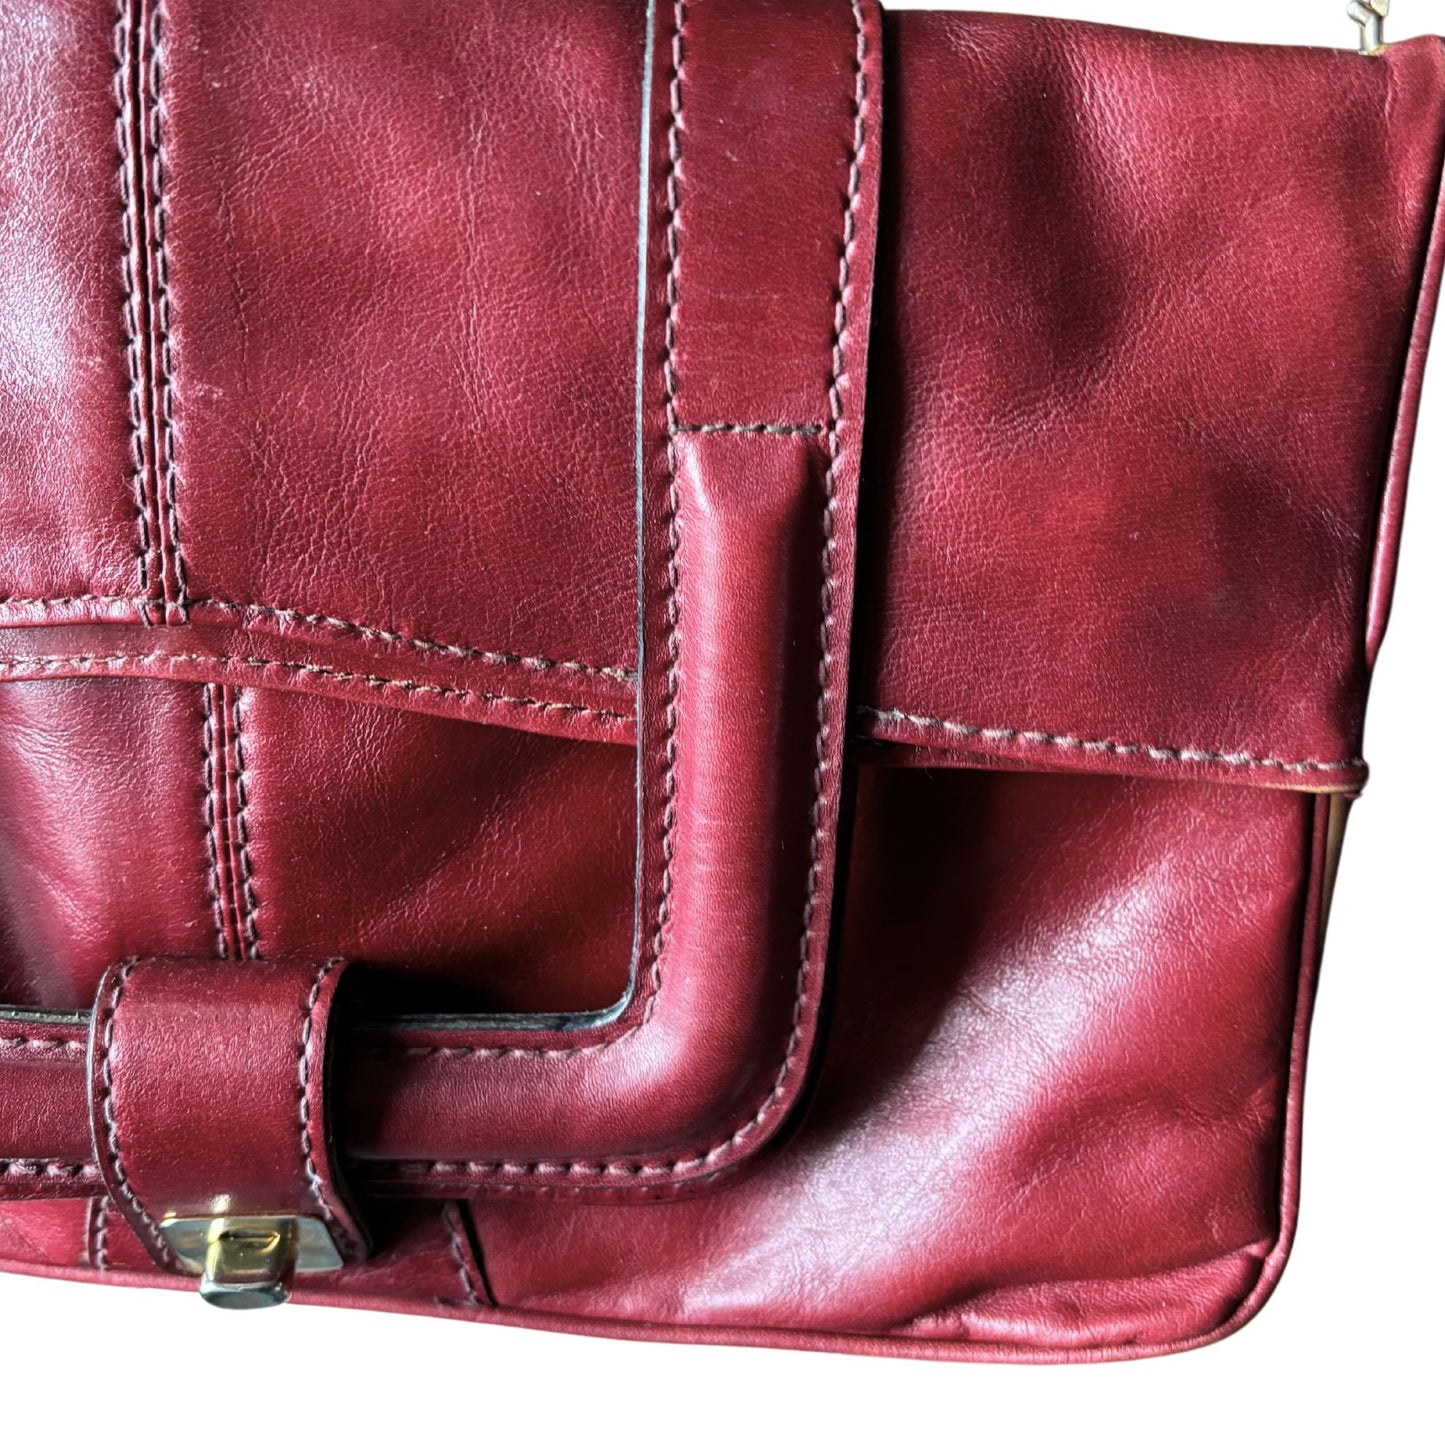 Dark Red Leather Vintage Handbag with Detachable Shoulder Strap. Stylish and Secure